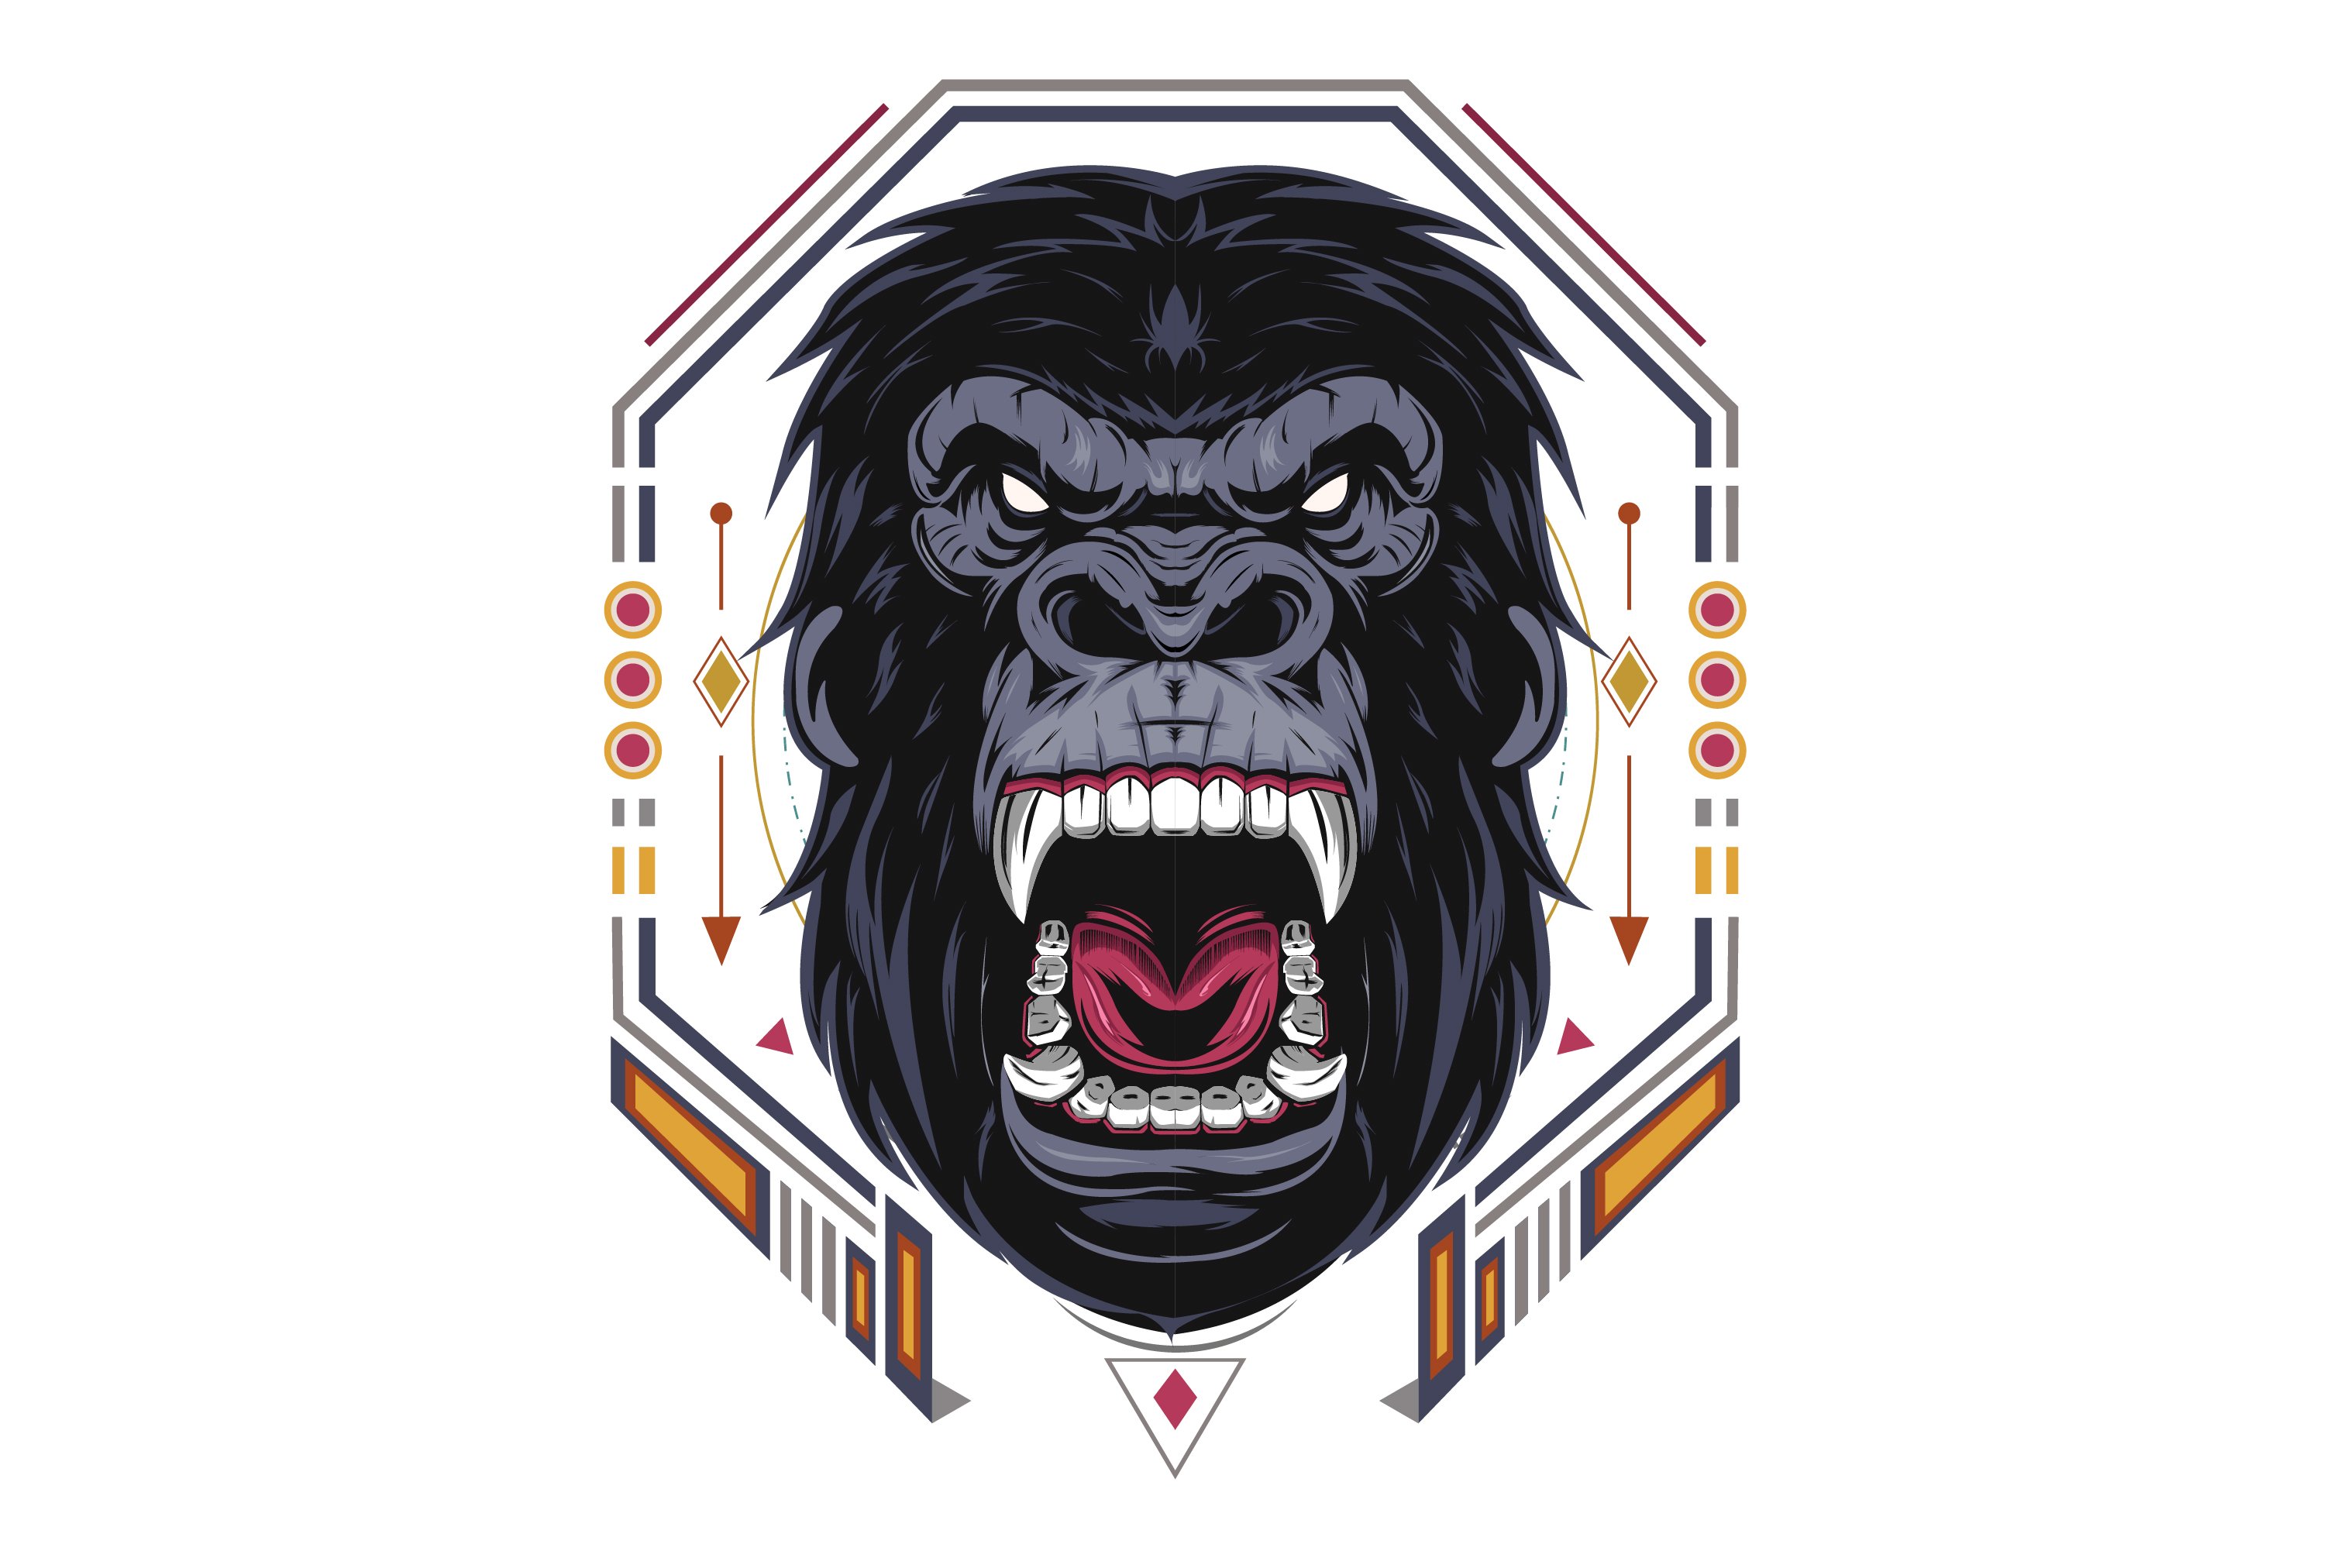 Mad gorilla emblem preview image.